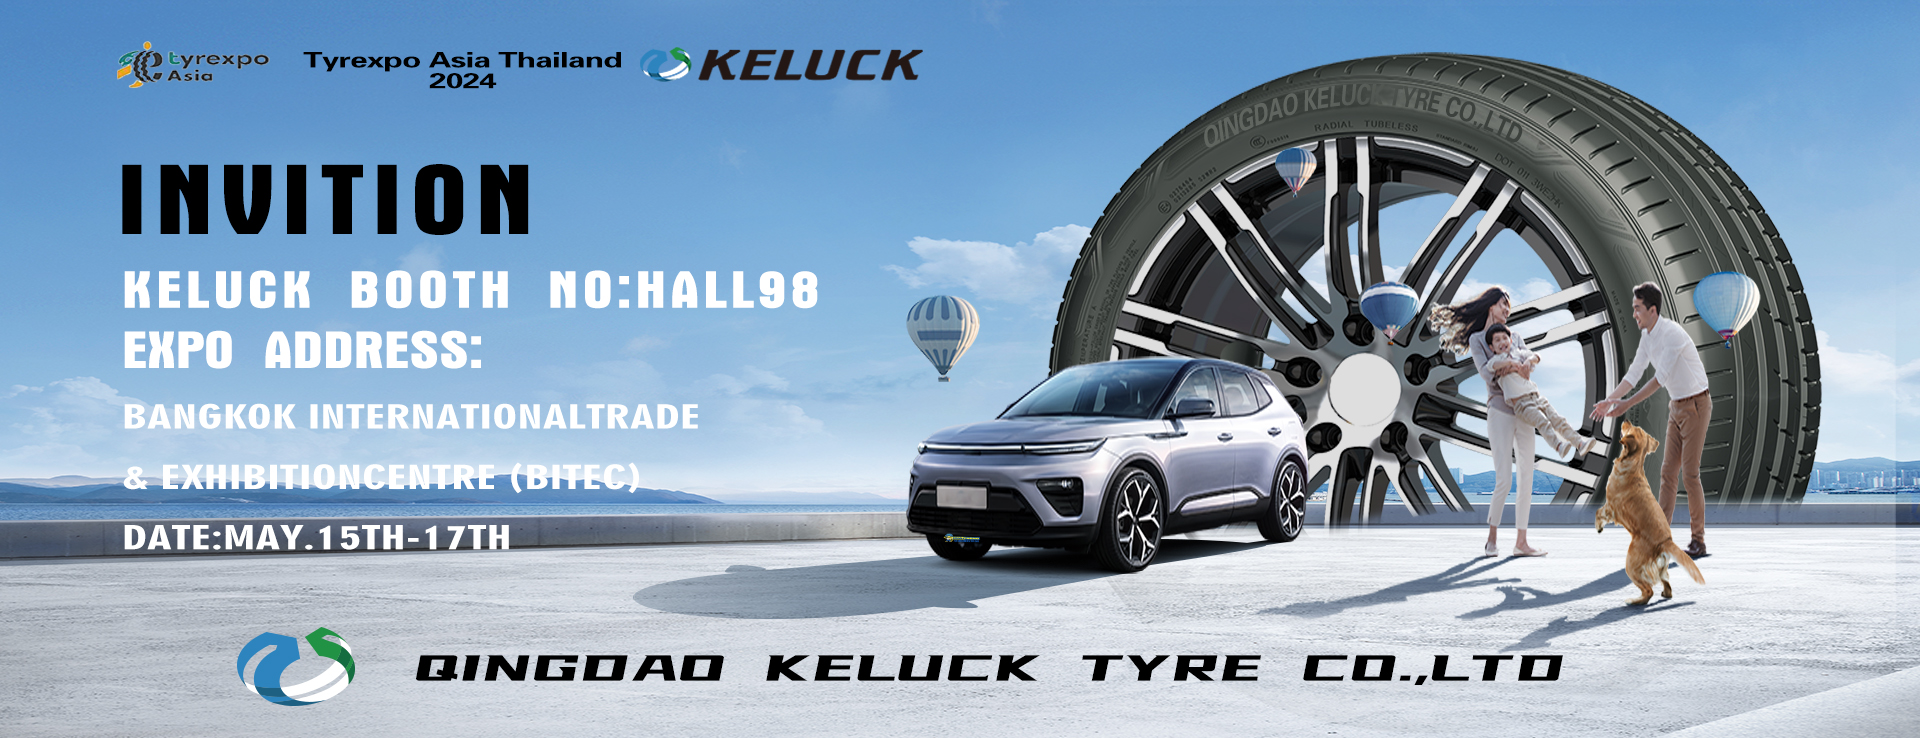 Qingdao Keluck Tyre Co., Ltd. to Showcase at TyreExpo Asia Thailand 2024